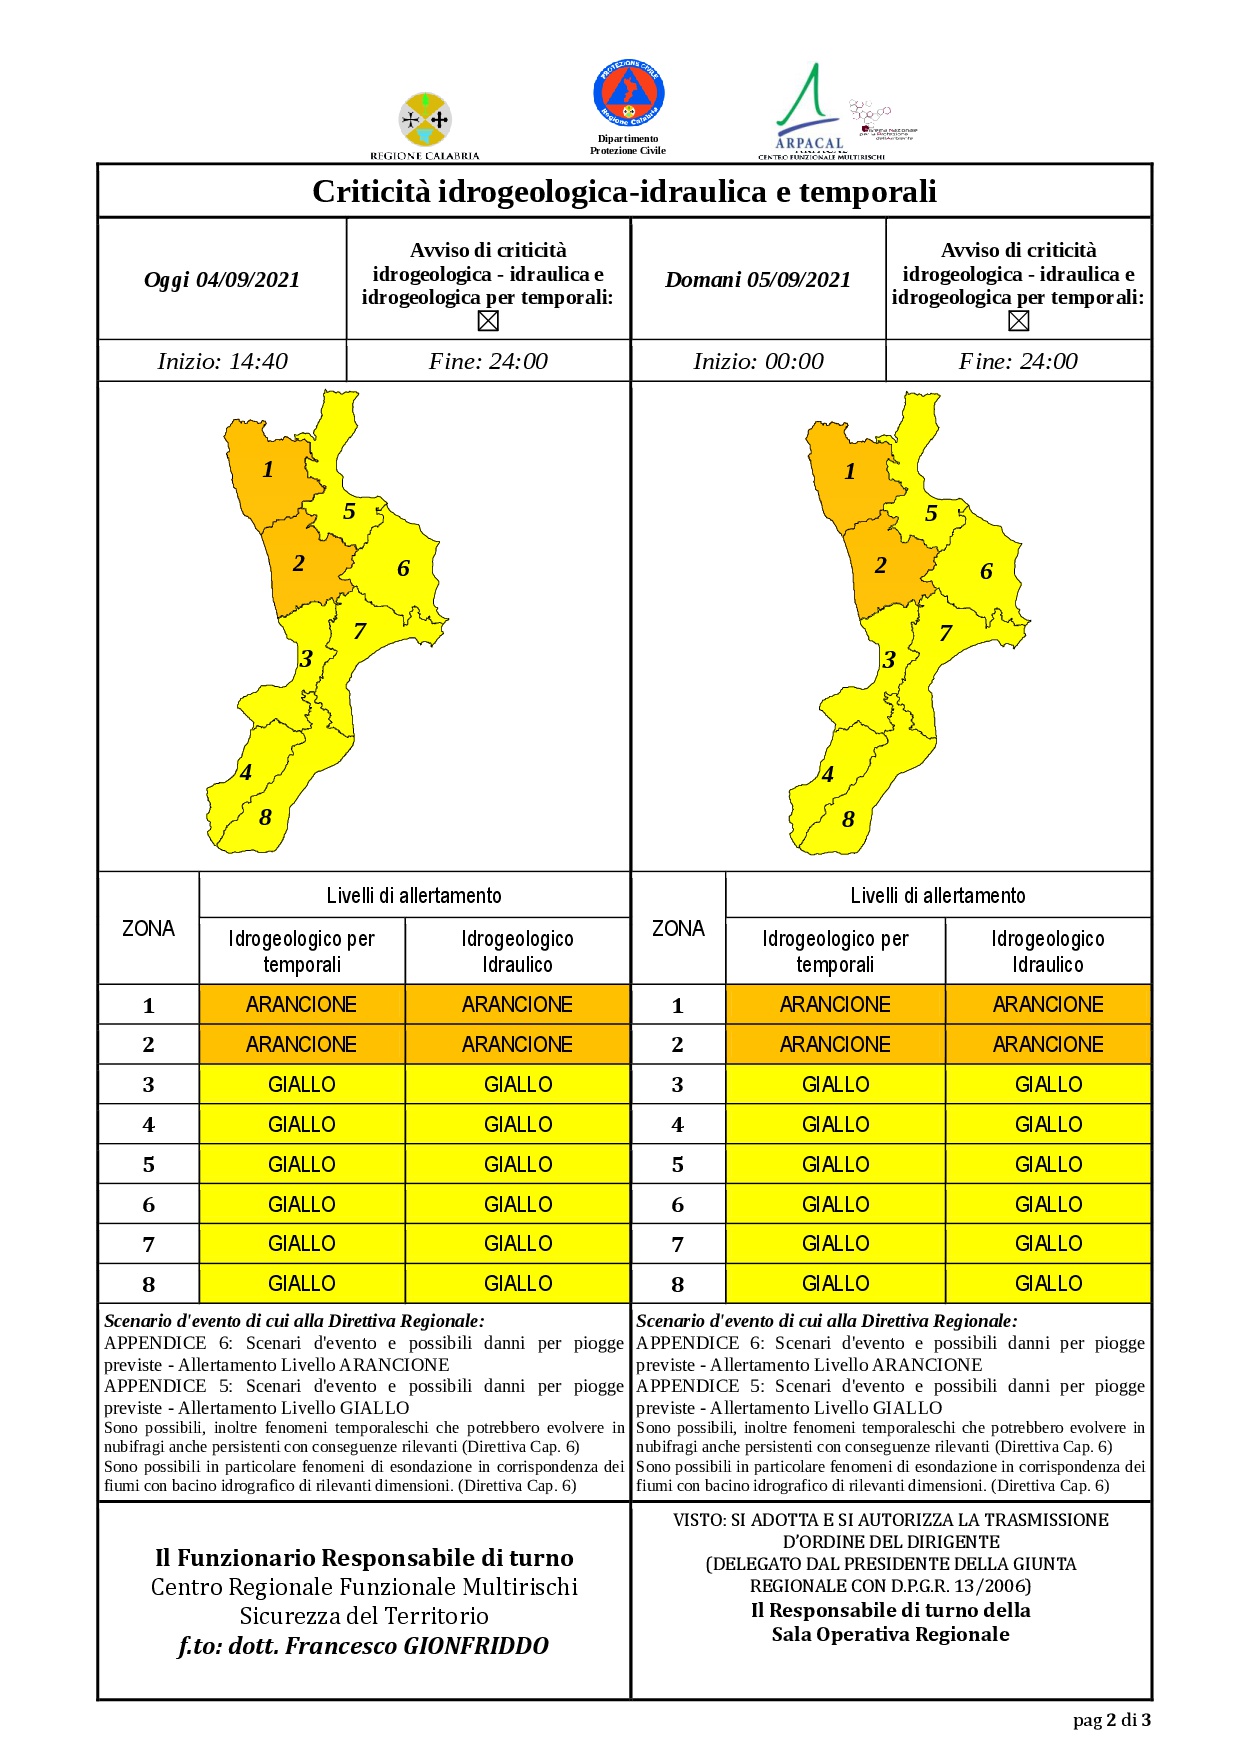 Criticità idrogeologica-idraulica e temporali in Calabria 04-09-2021